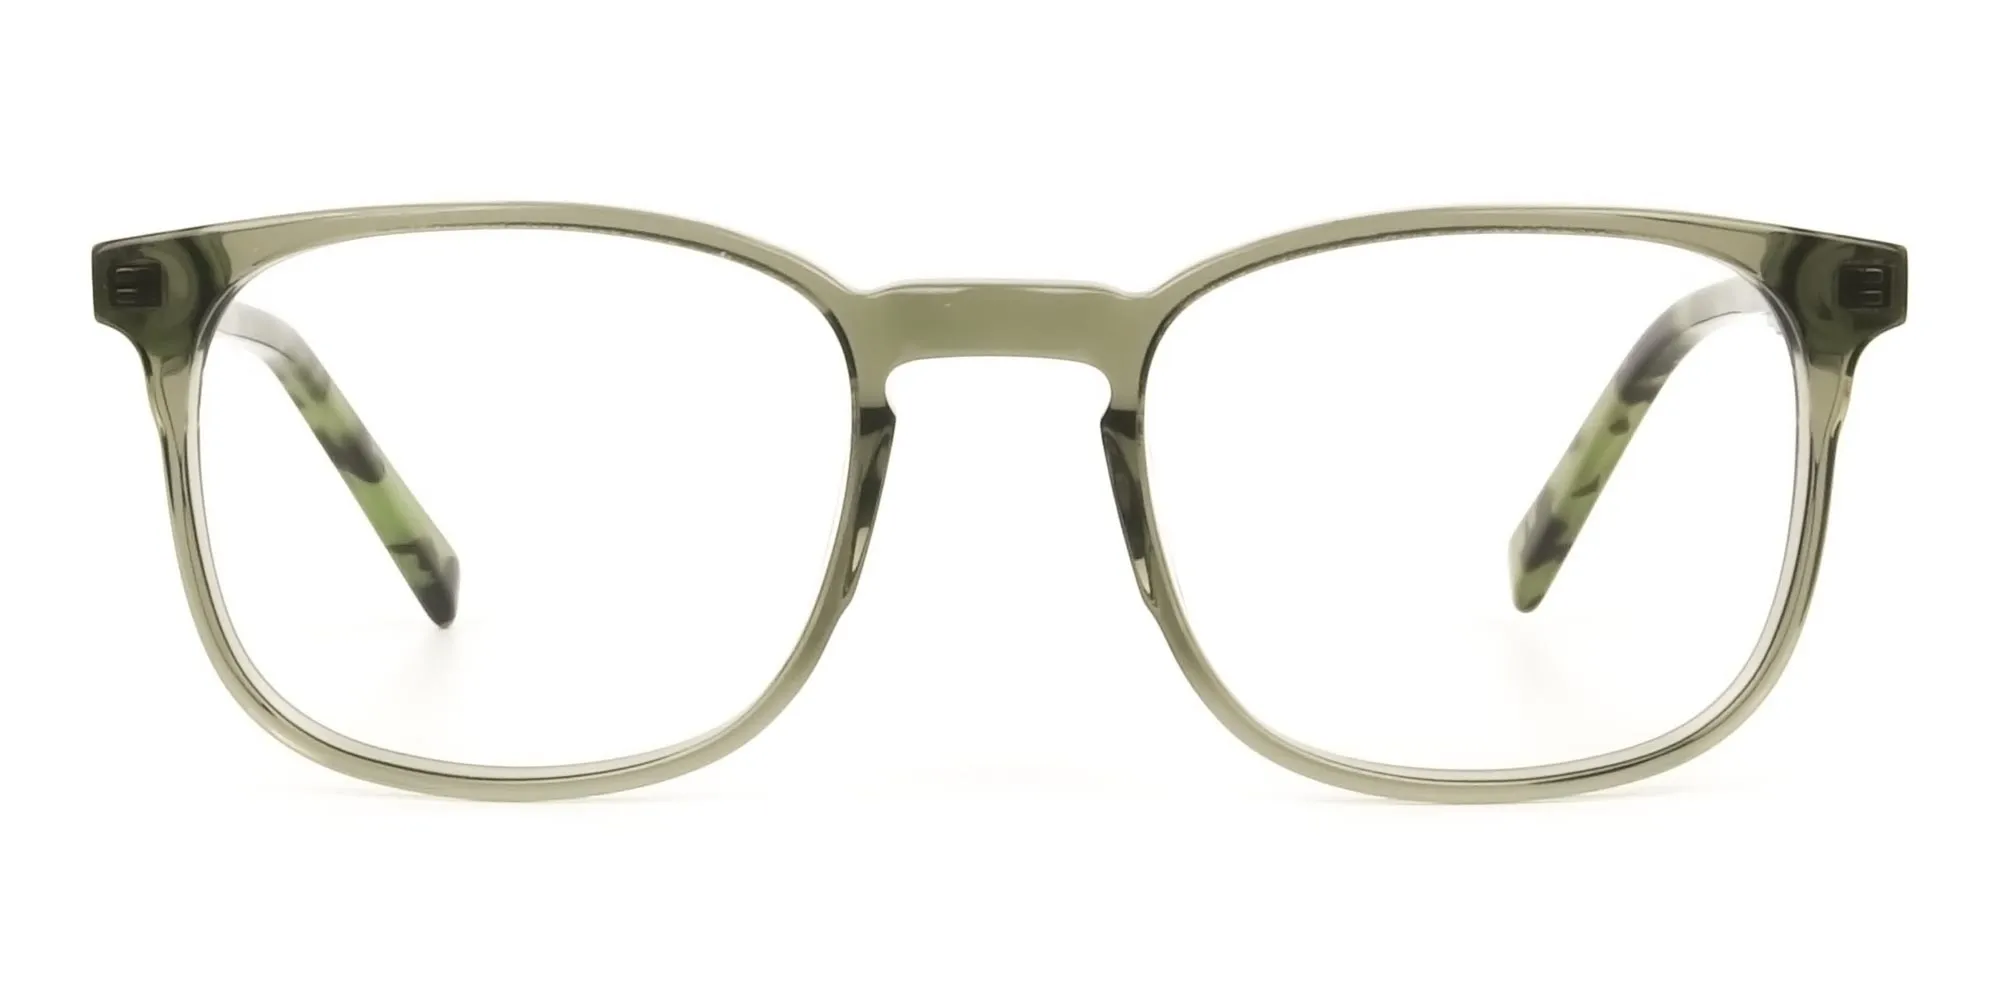 Translucent Camouflage & Olive Green Square Glasses - 2